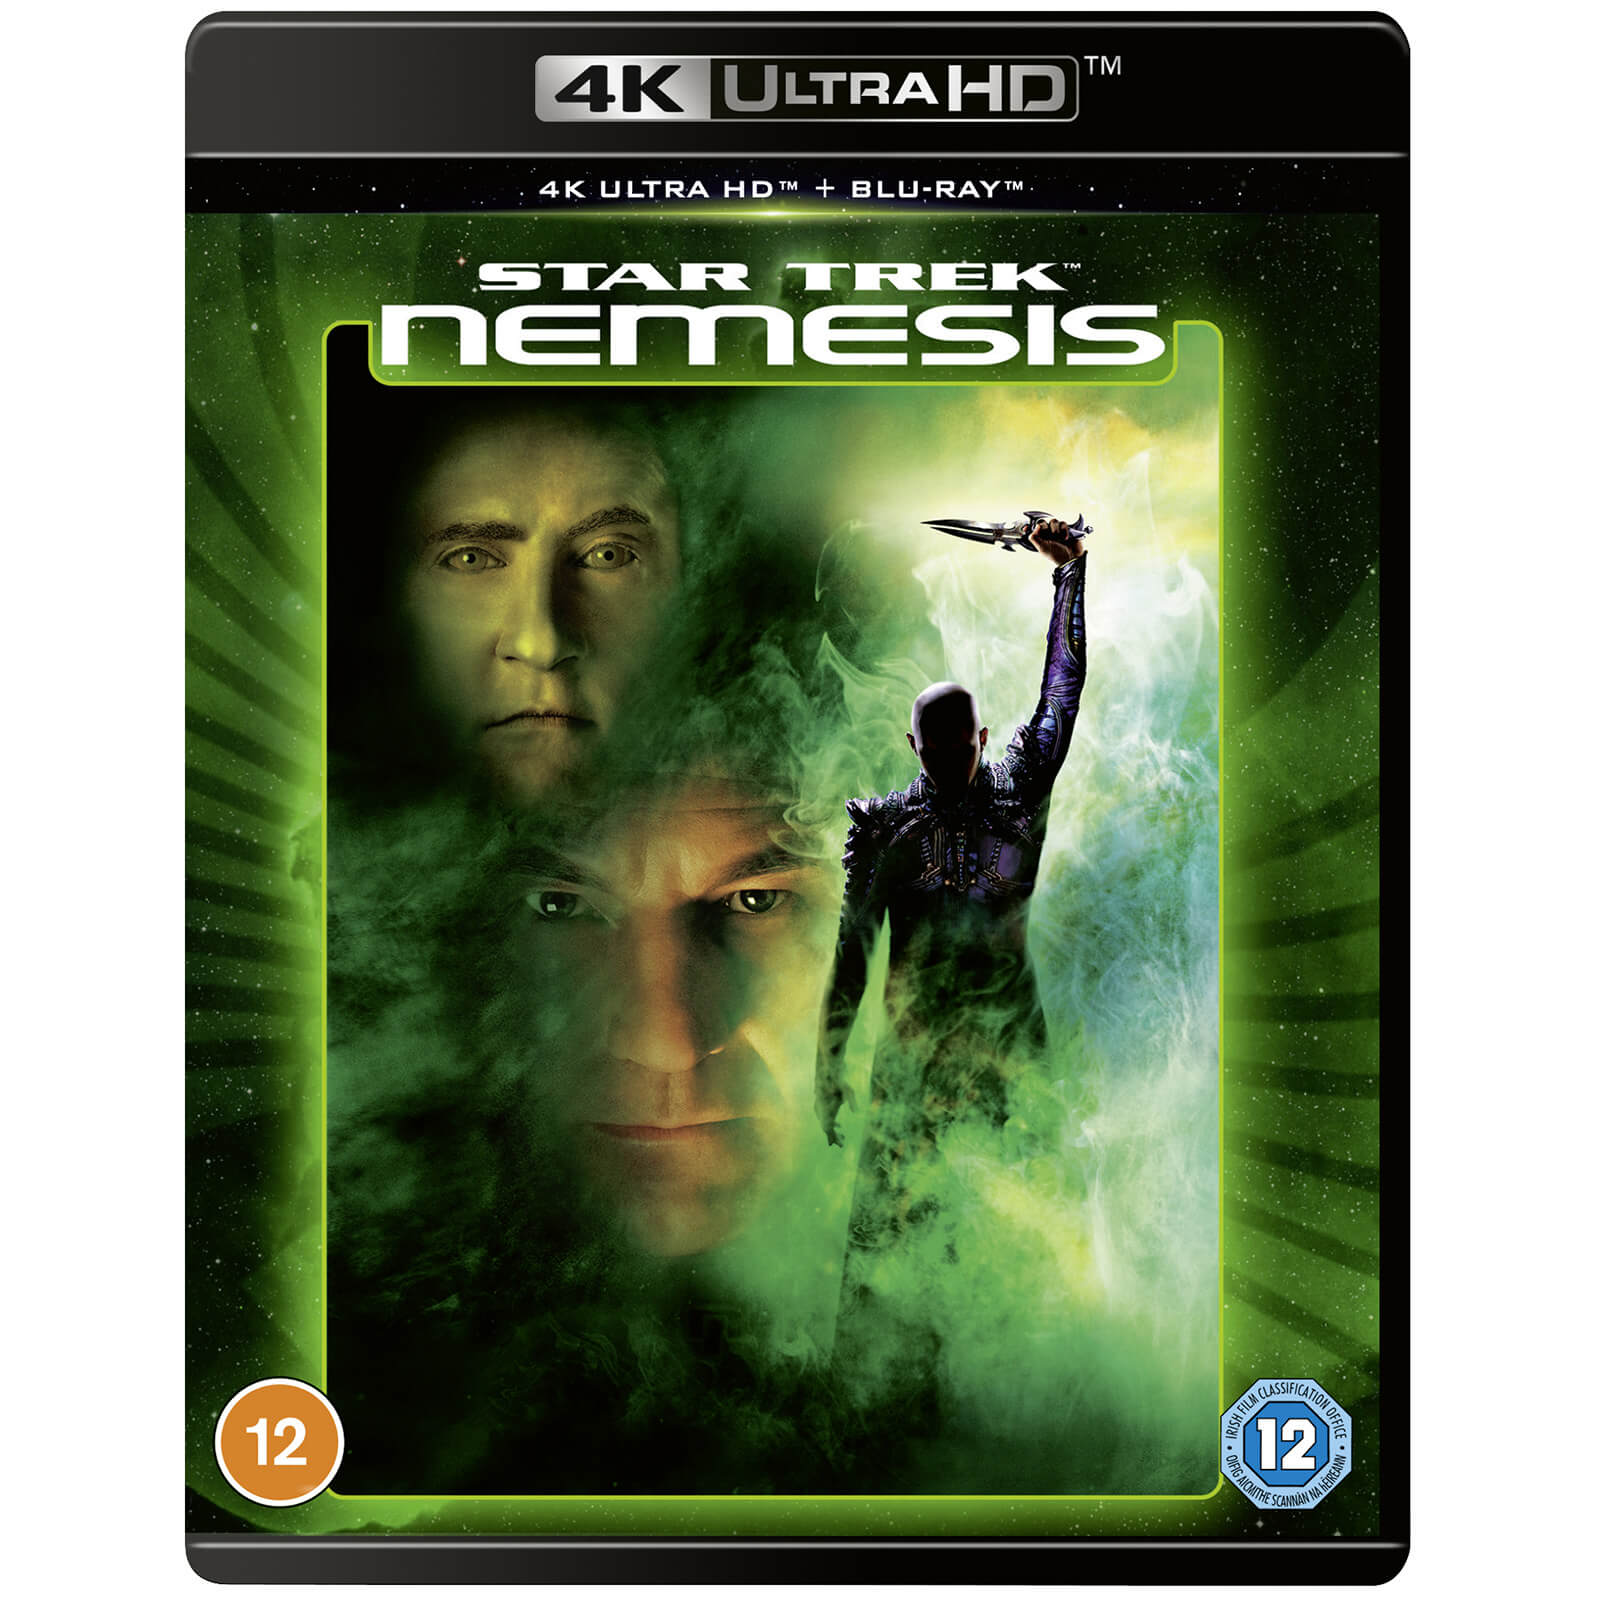 Star Trek X: Nemesis 4K Ultra HD (includes Blu-ray)